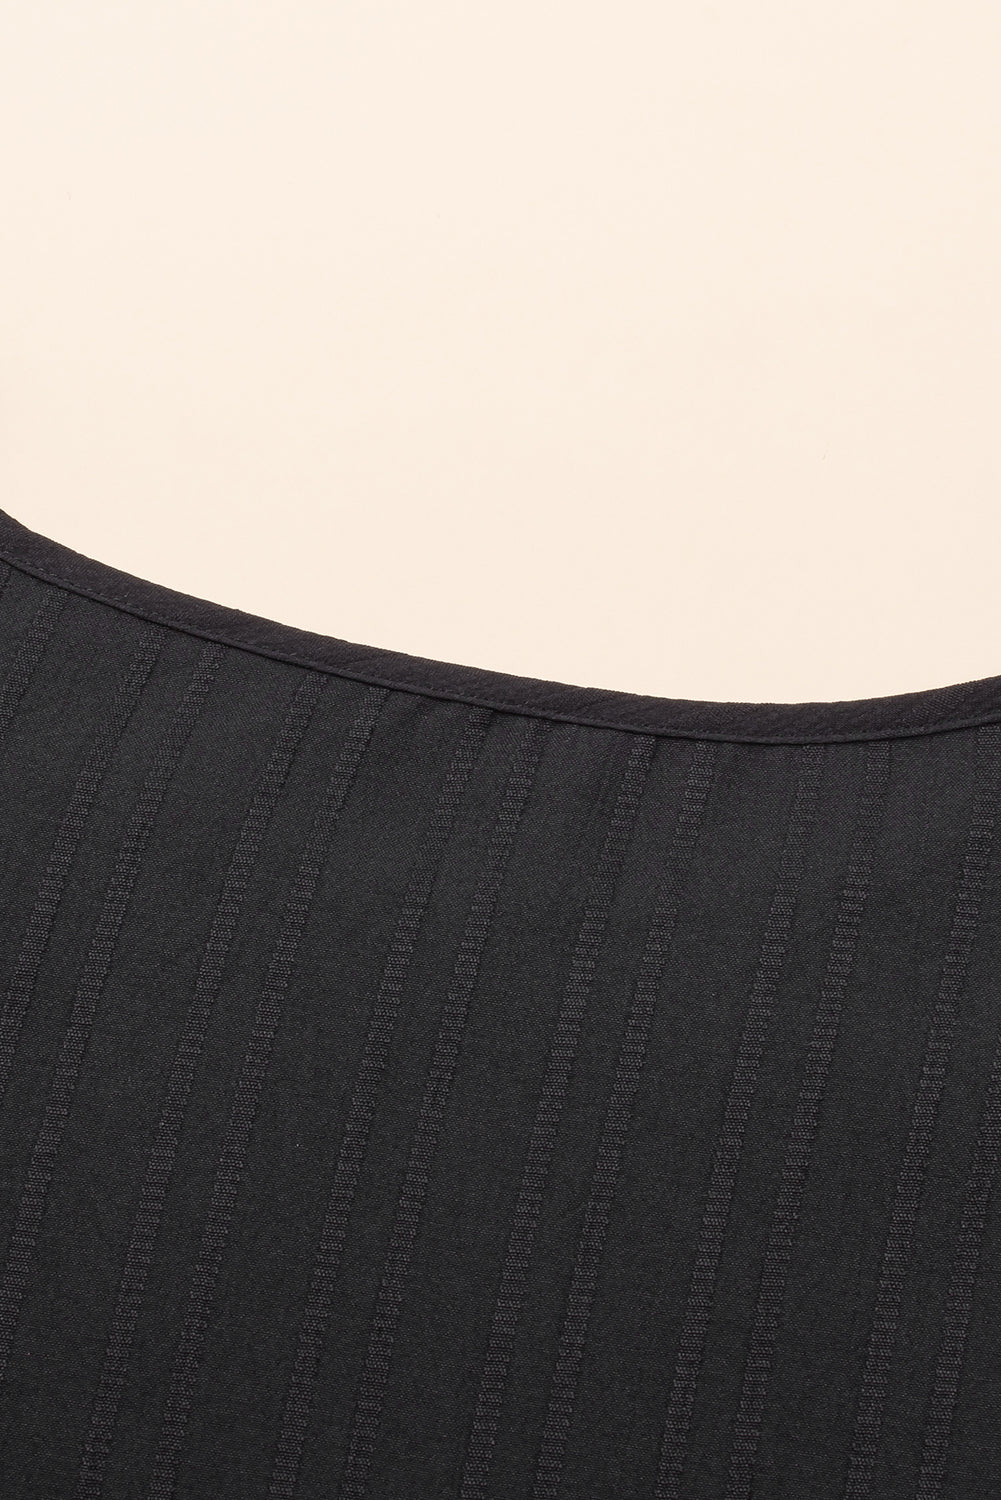 Black Ruffled Sleeve Rib Textured Plus Size Shift Dress